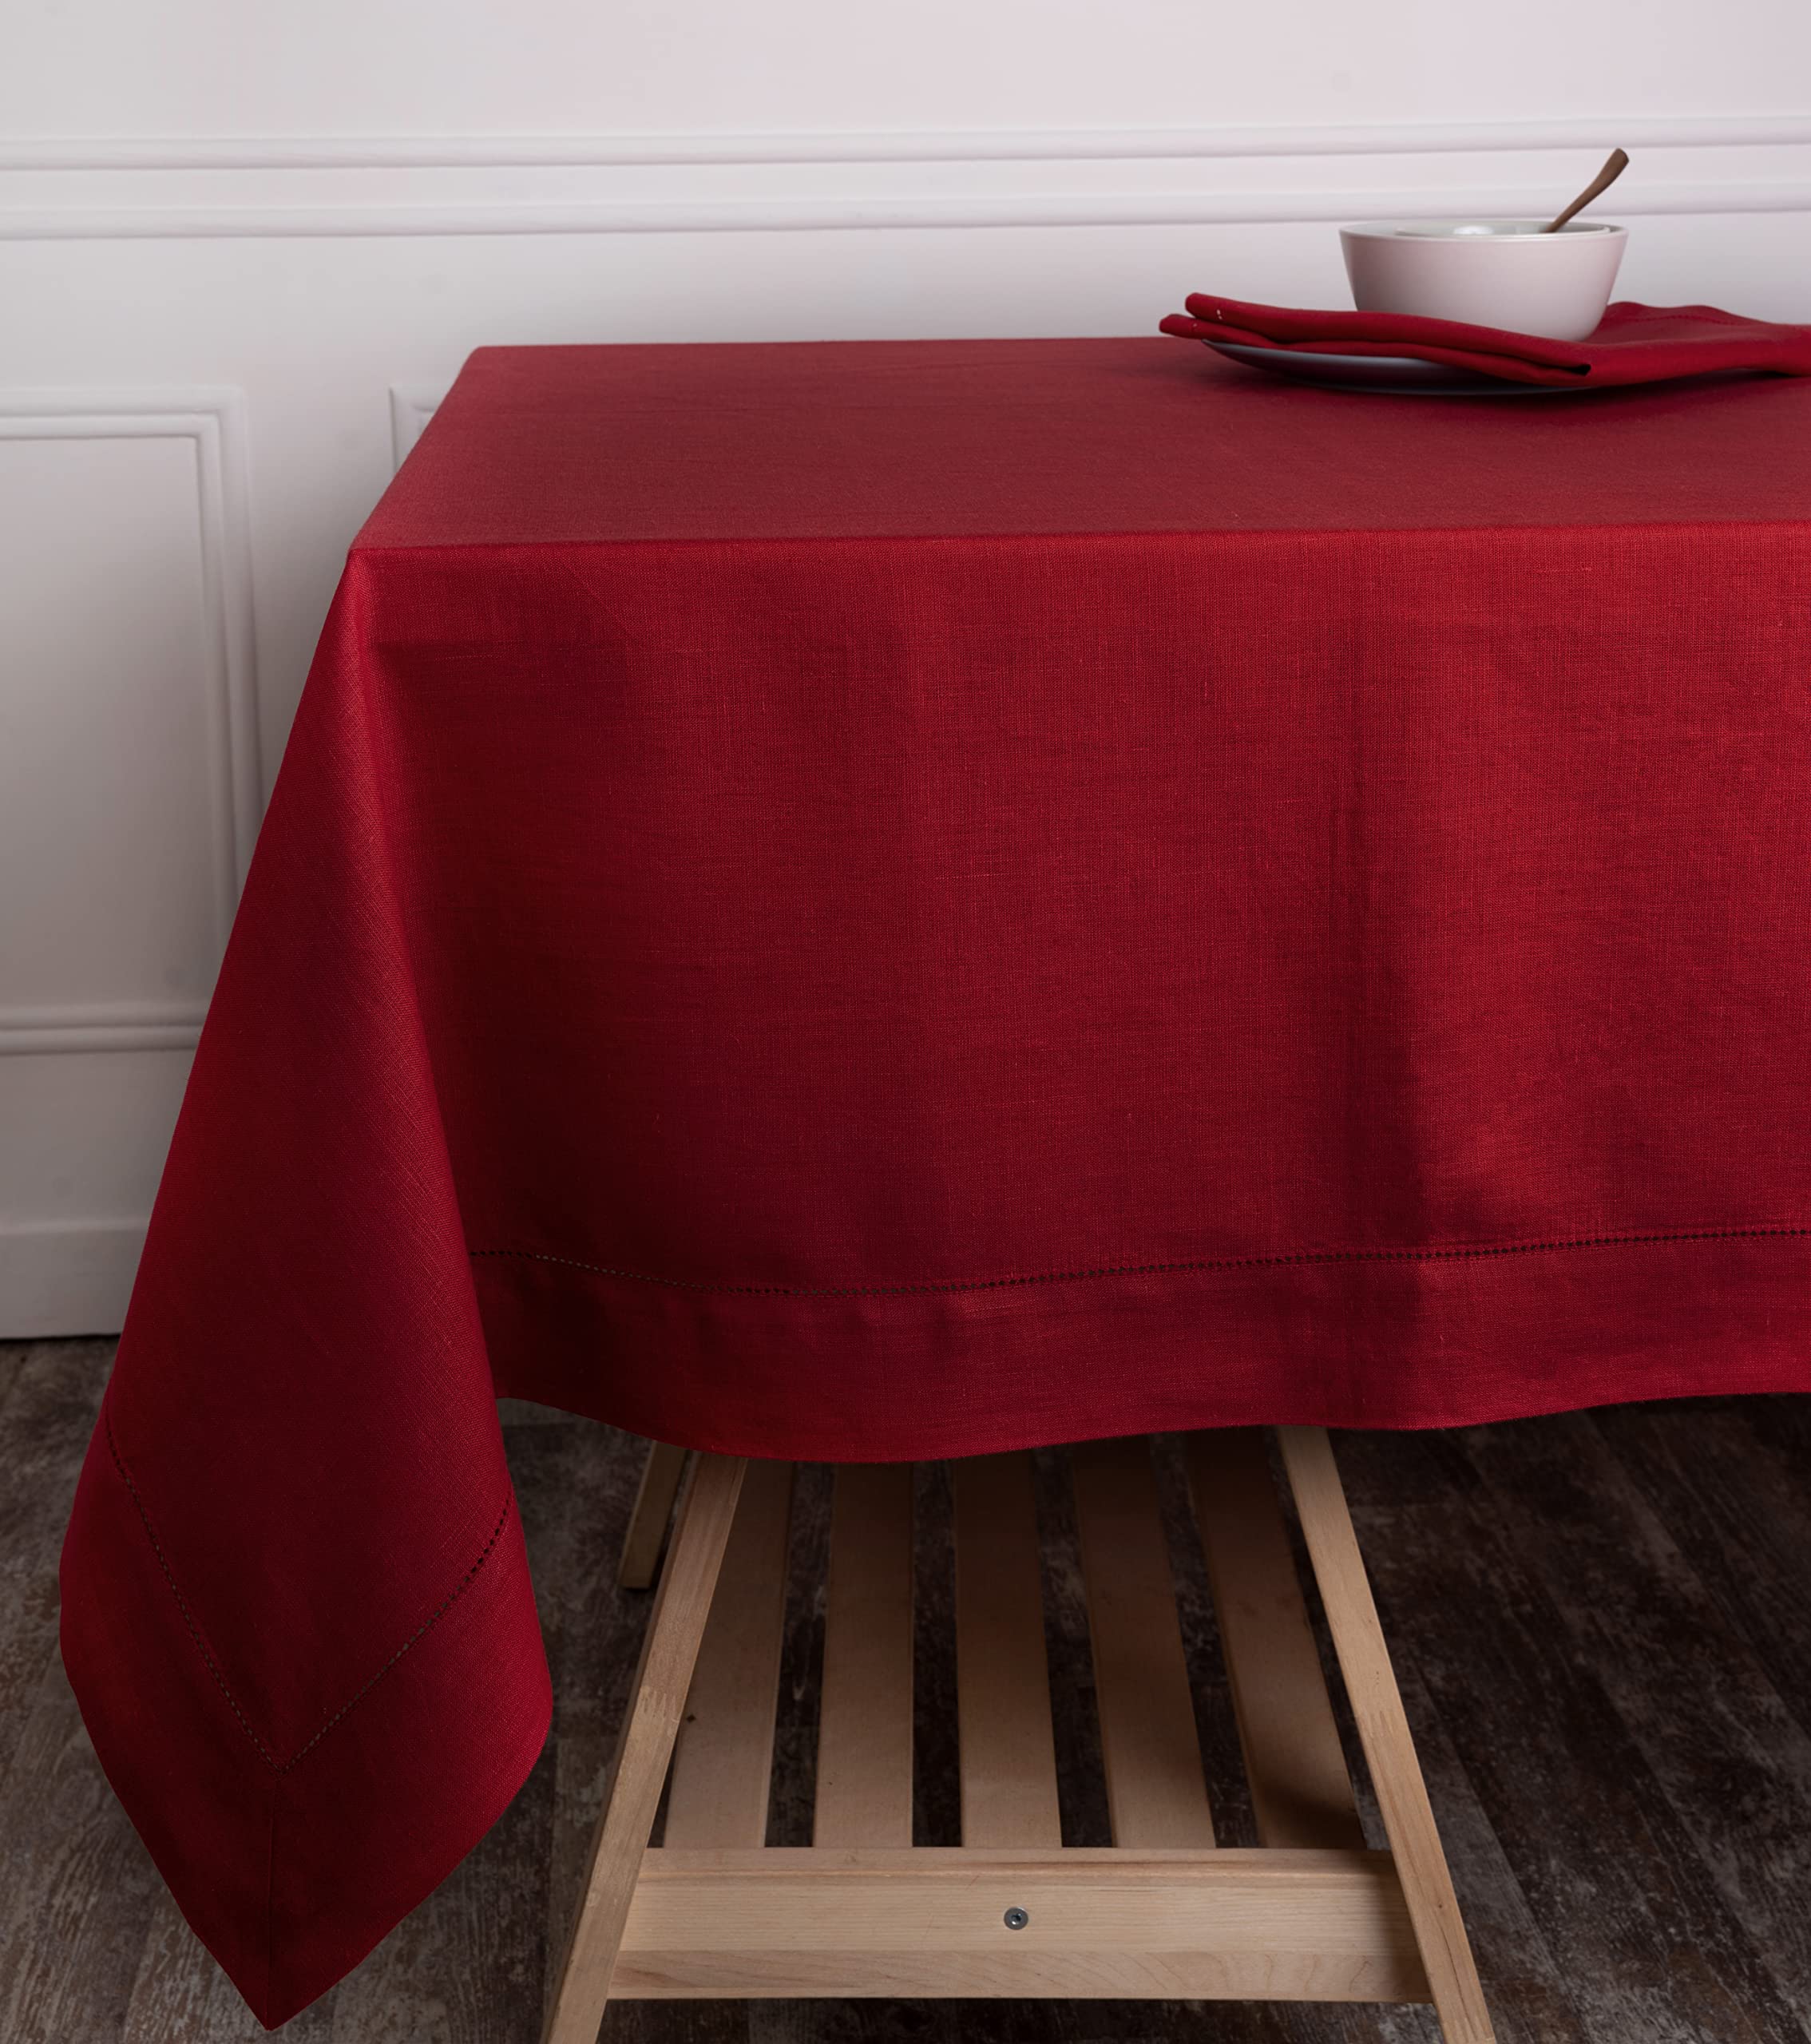 D\'Moksha Homes DMoksha Modern Tablecloth Red 60 x 90 Inch for Rectangle Tables- Pure Linen Hemstitch Elegant Tablecloth 90 inches Long for Spri